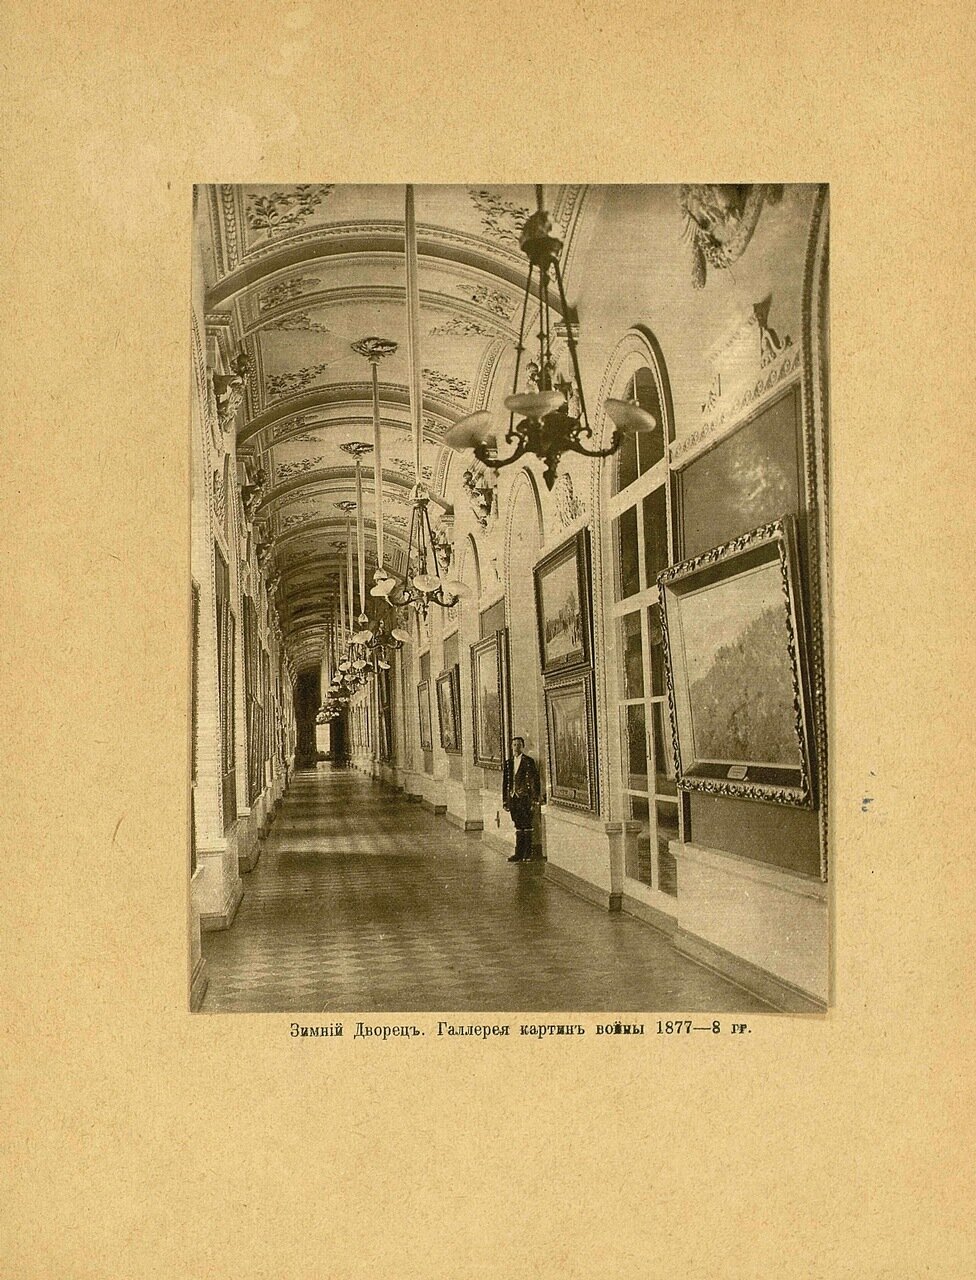 Галерея картин войны 1877-78 гг.